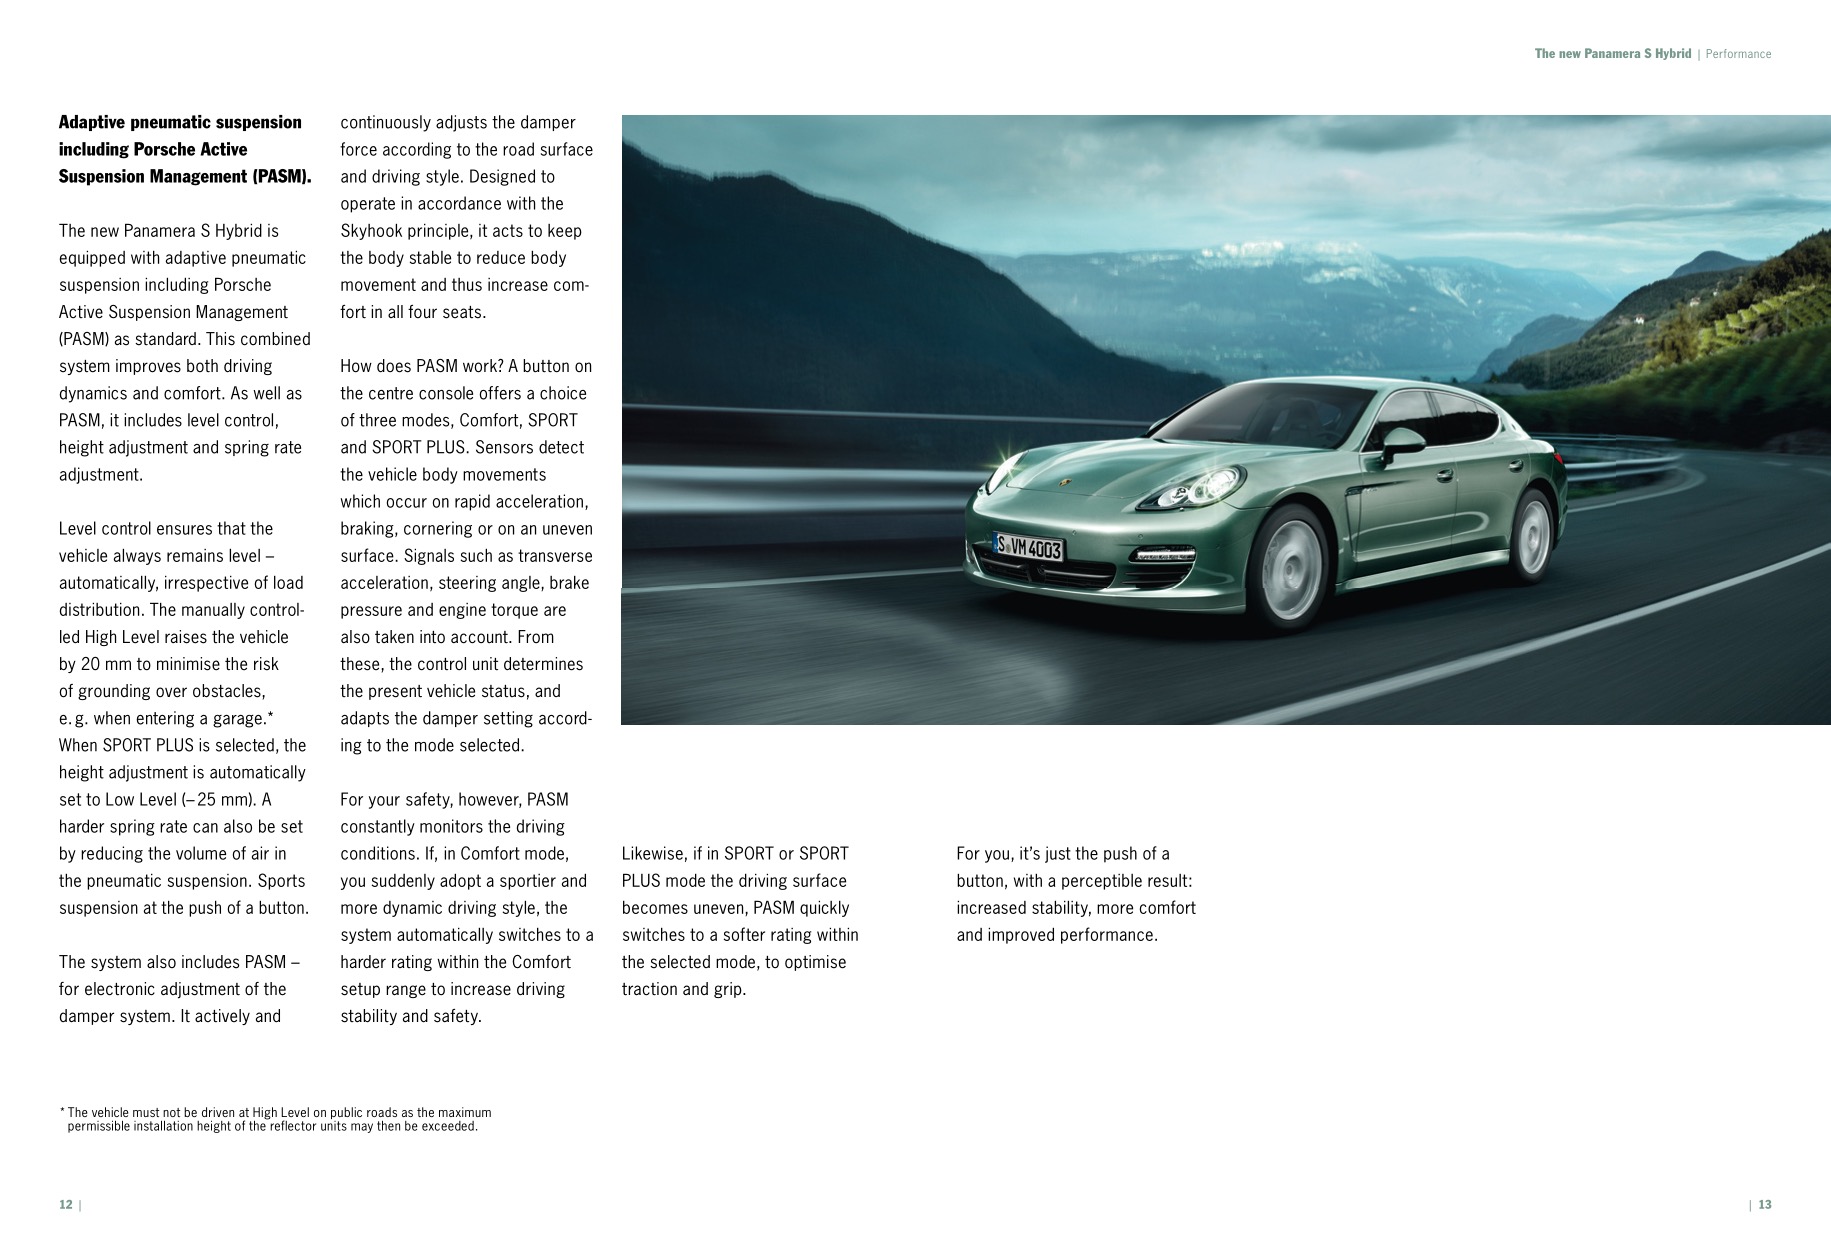 2011 Porsche Panamera Brochure Page 16